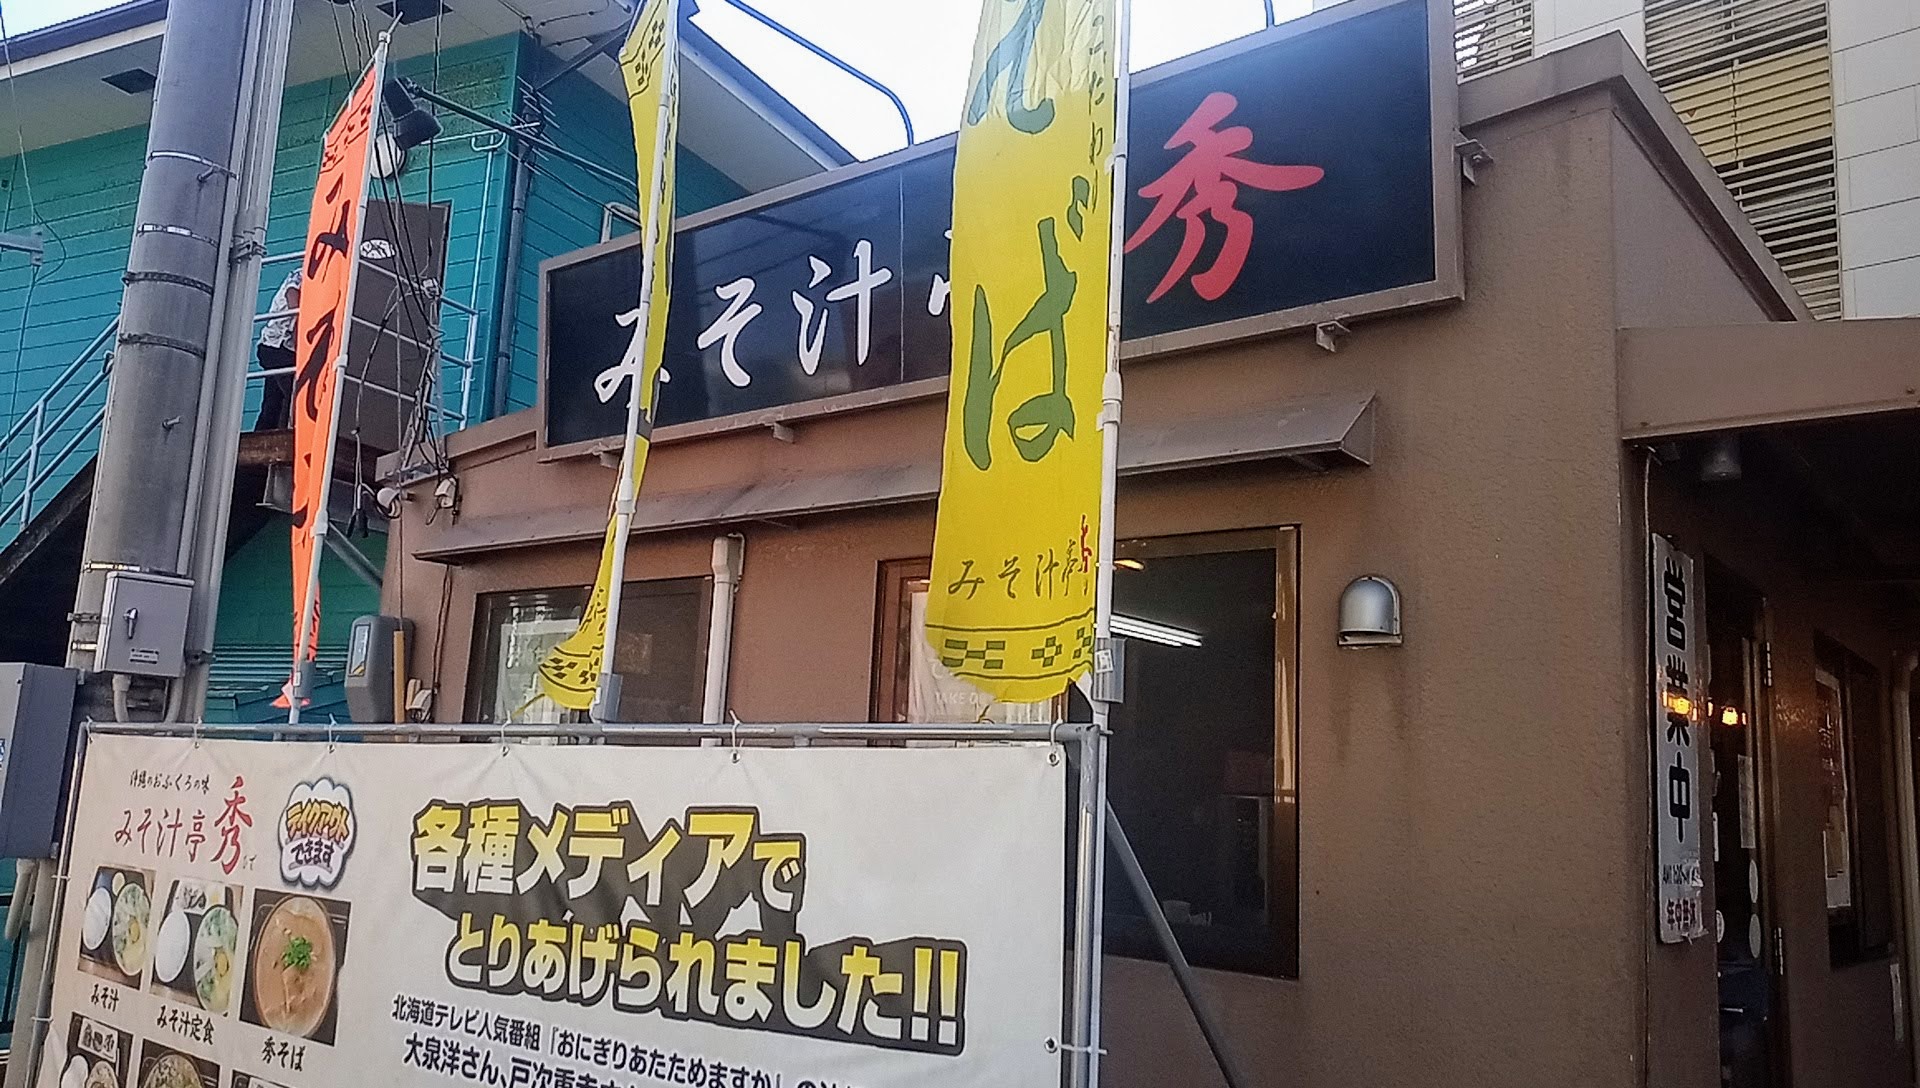 The Misoshiru-tei Hide, an unusual Okinawan-style miso soup specialty restaurant